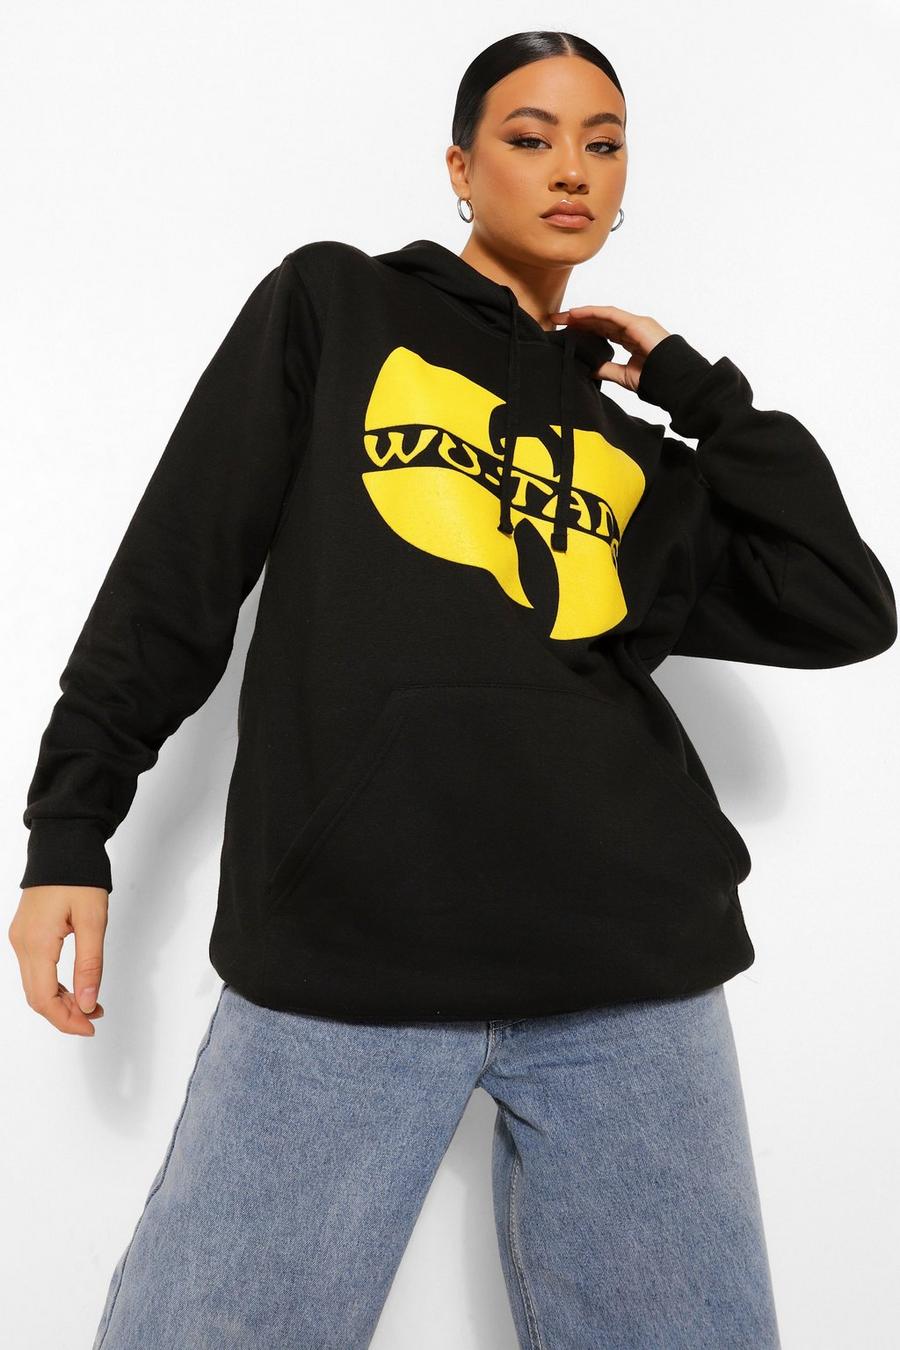 Wu tang clan x knicks shirt, hoodie, sweater, long sleeve and tank top